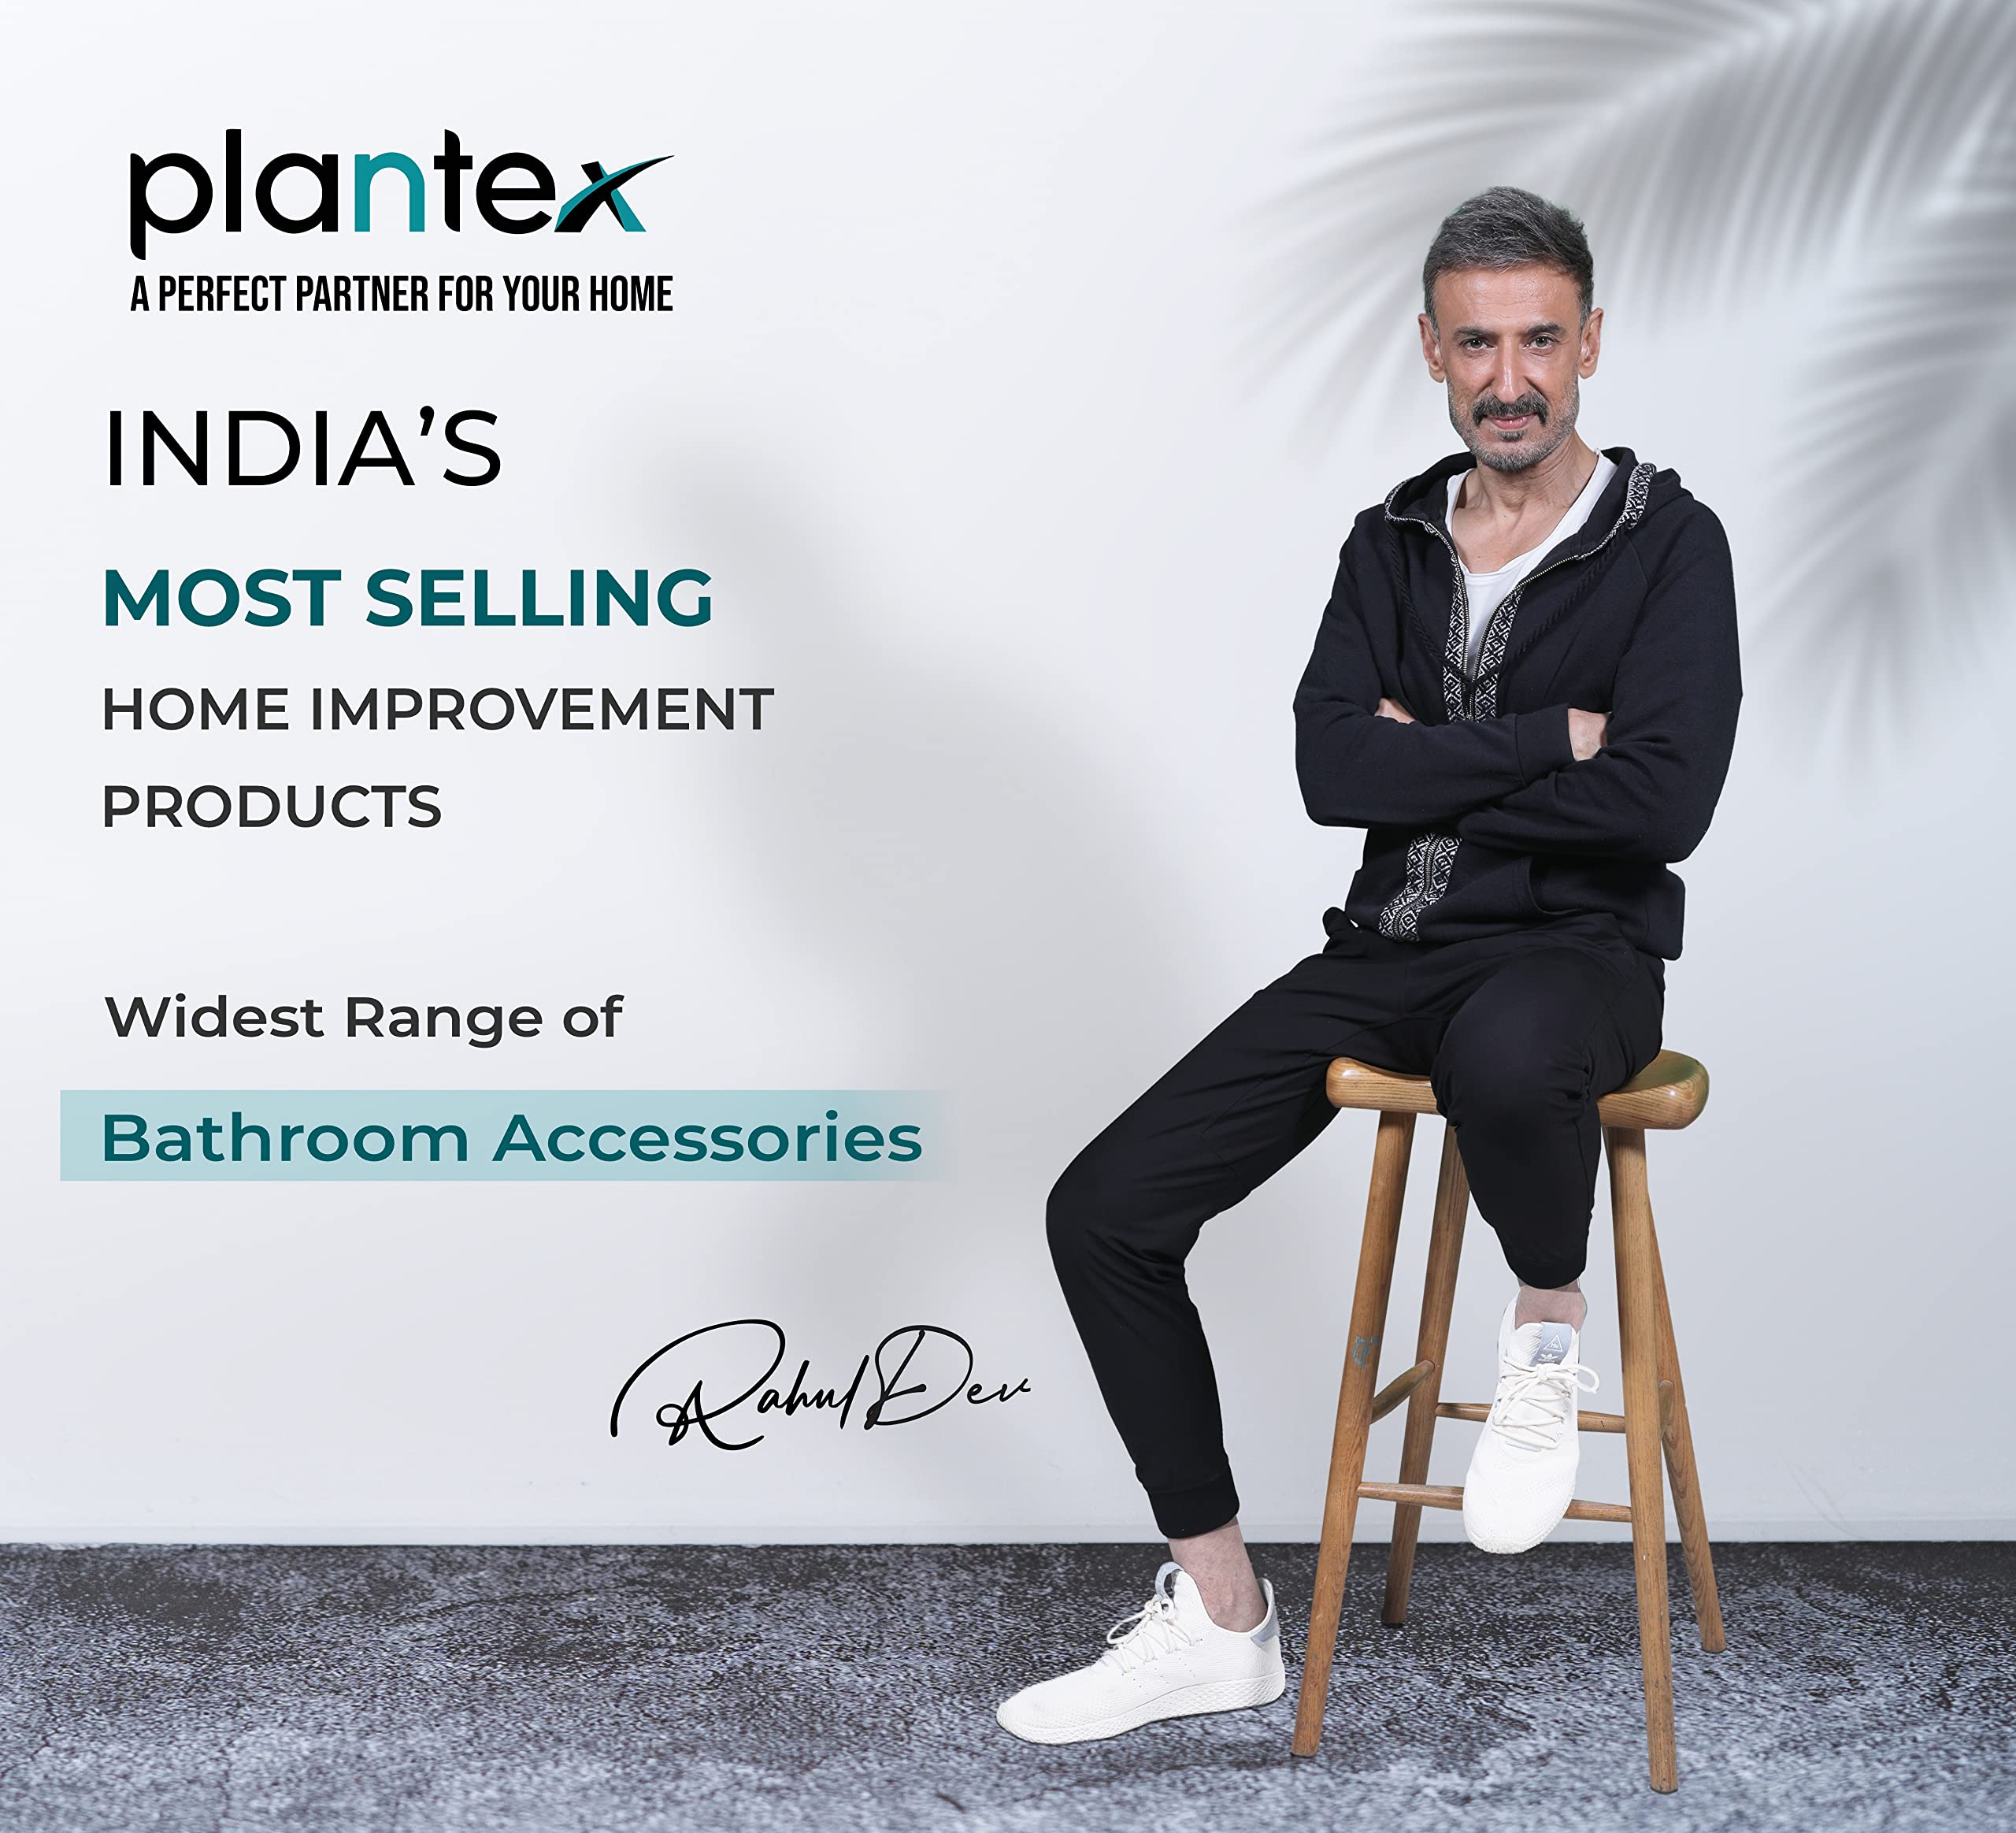 Plantex Squaro Stainless Steel 304 Grade Toilet Paper Roll Holder/Toilet Paper Holder in Bathroom/Kitchen/Bathroom Accessories (Black)